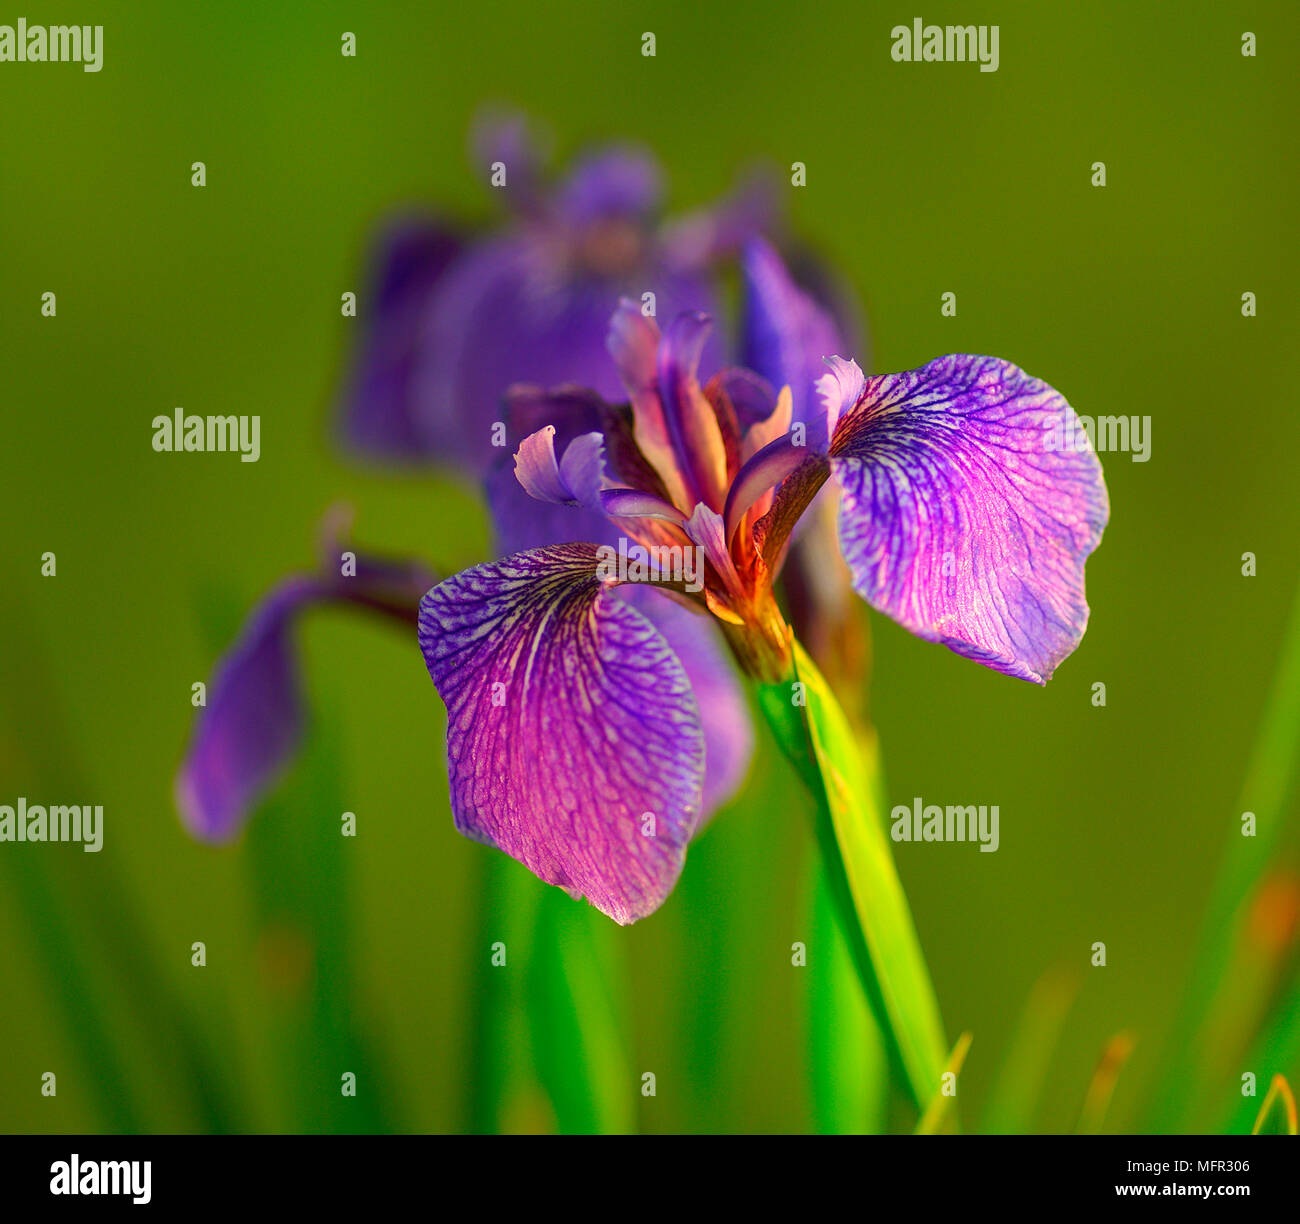 Dwarf irises with purple and white markings. Stock Photo